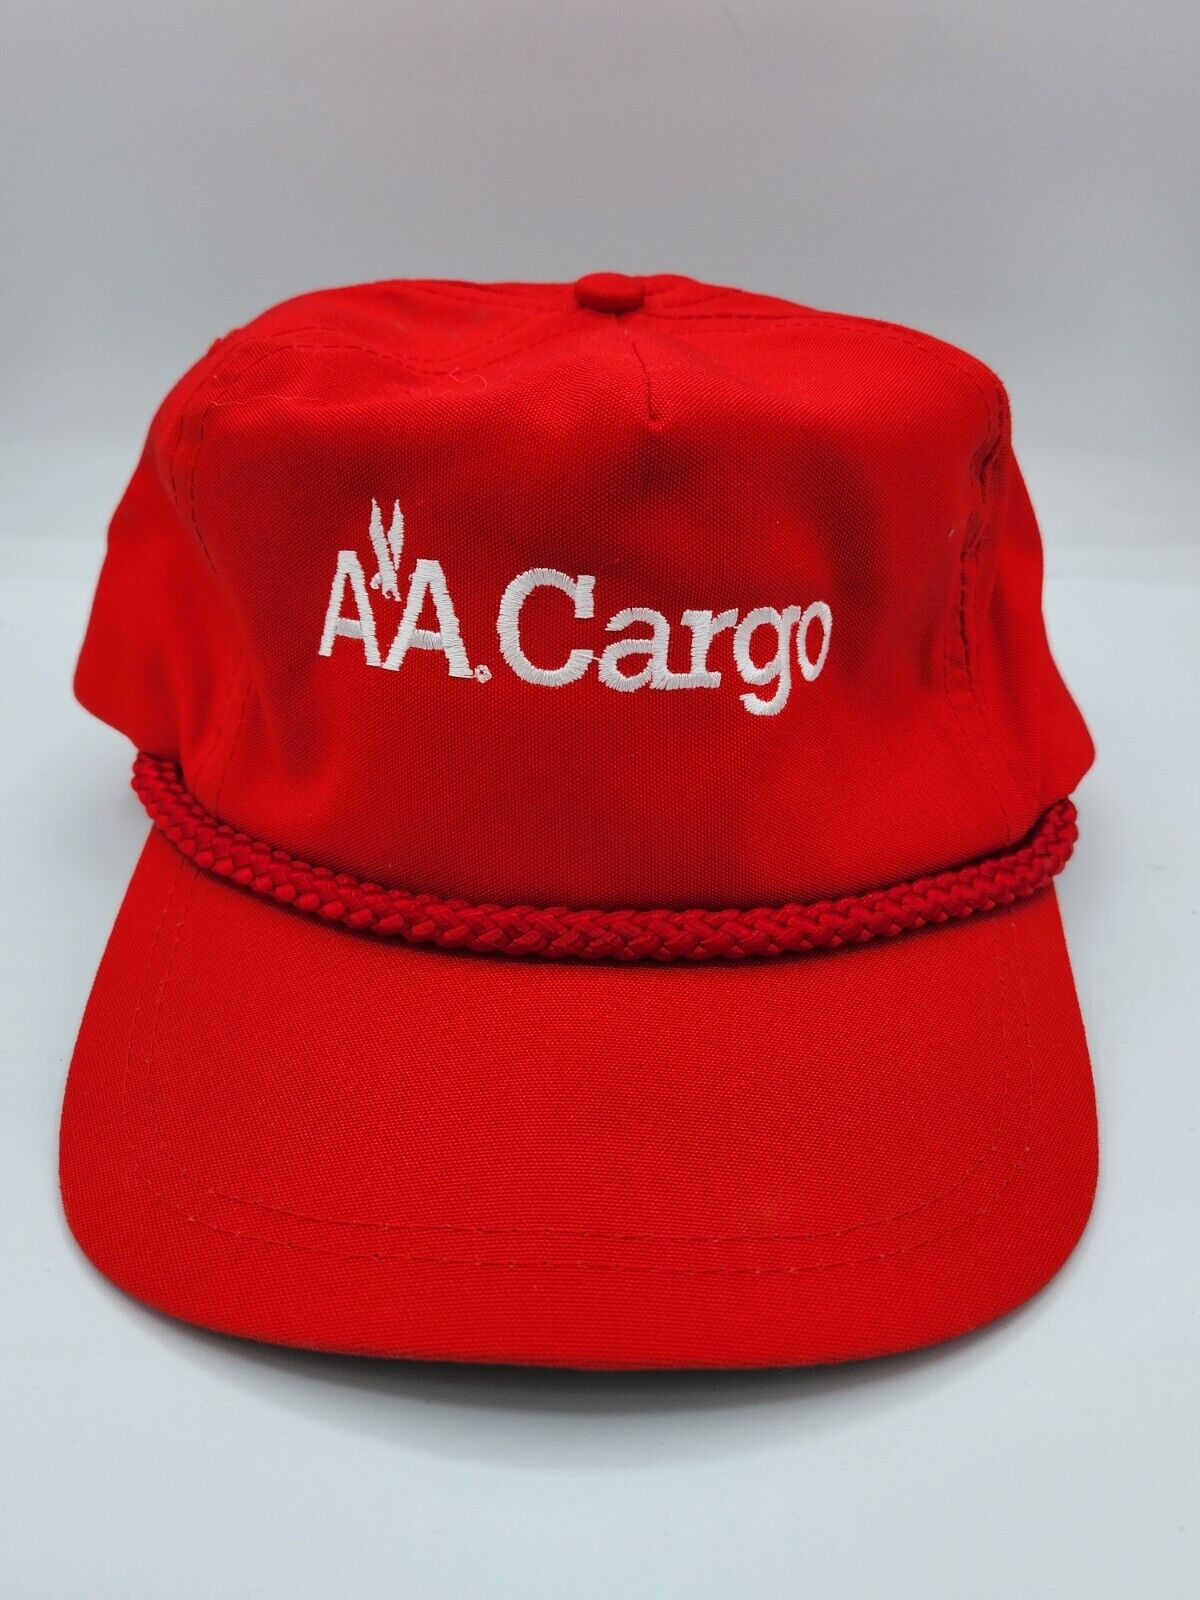 Vintage American Airlines AA Cargo Red Kati Rope Adjustable Hat